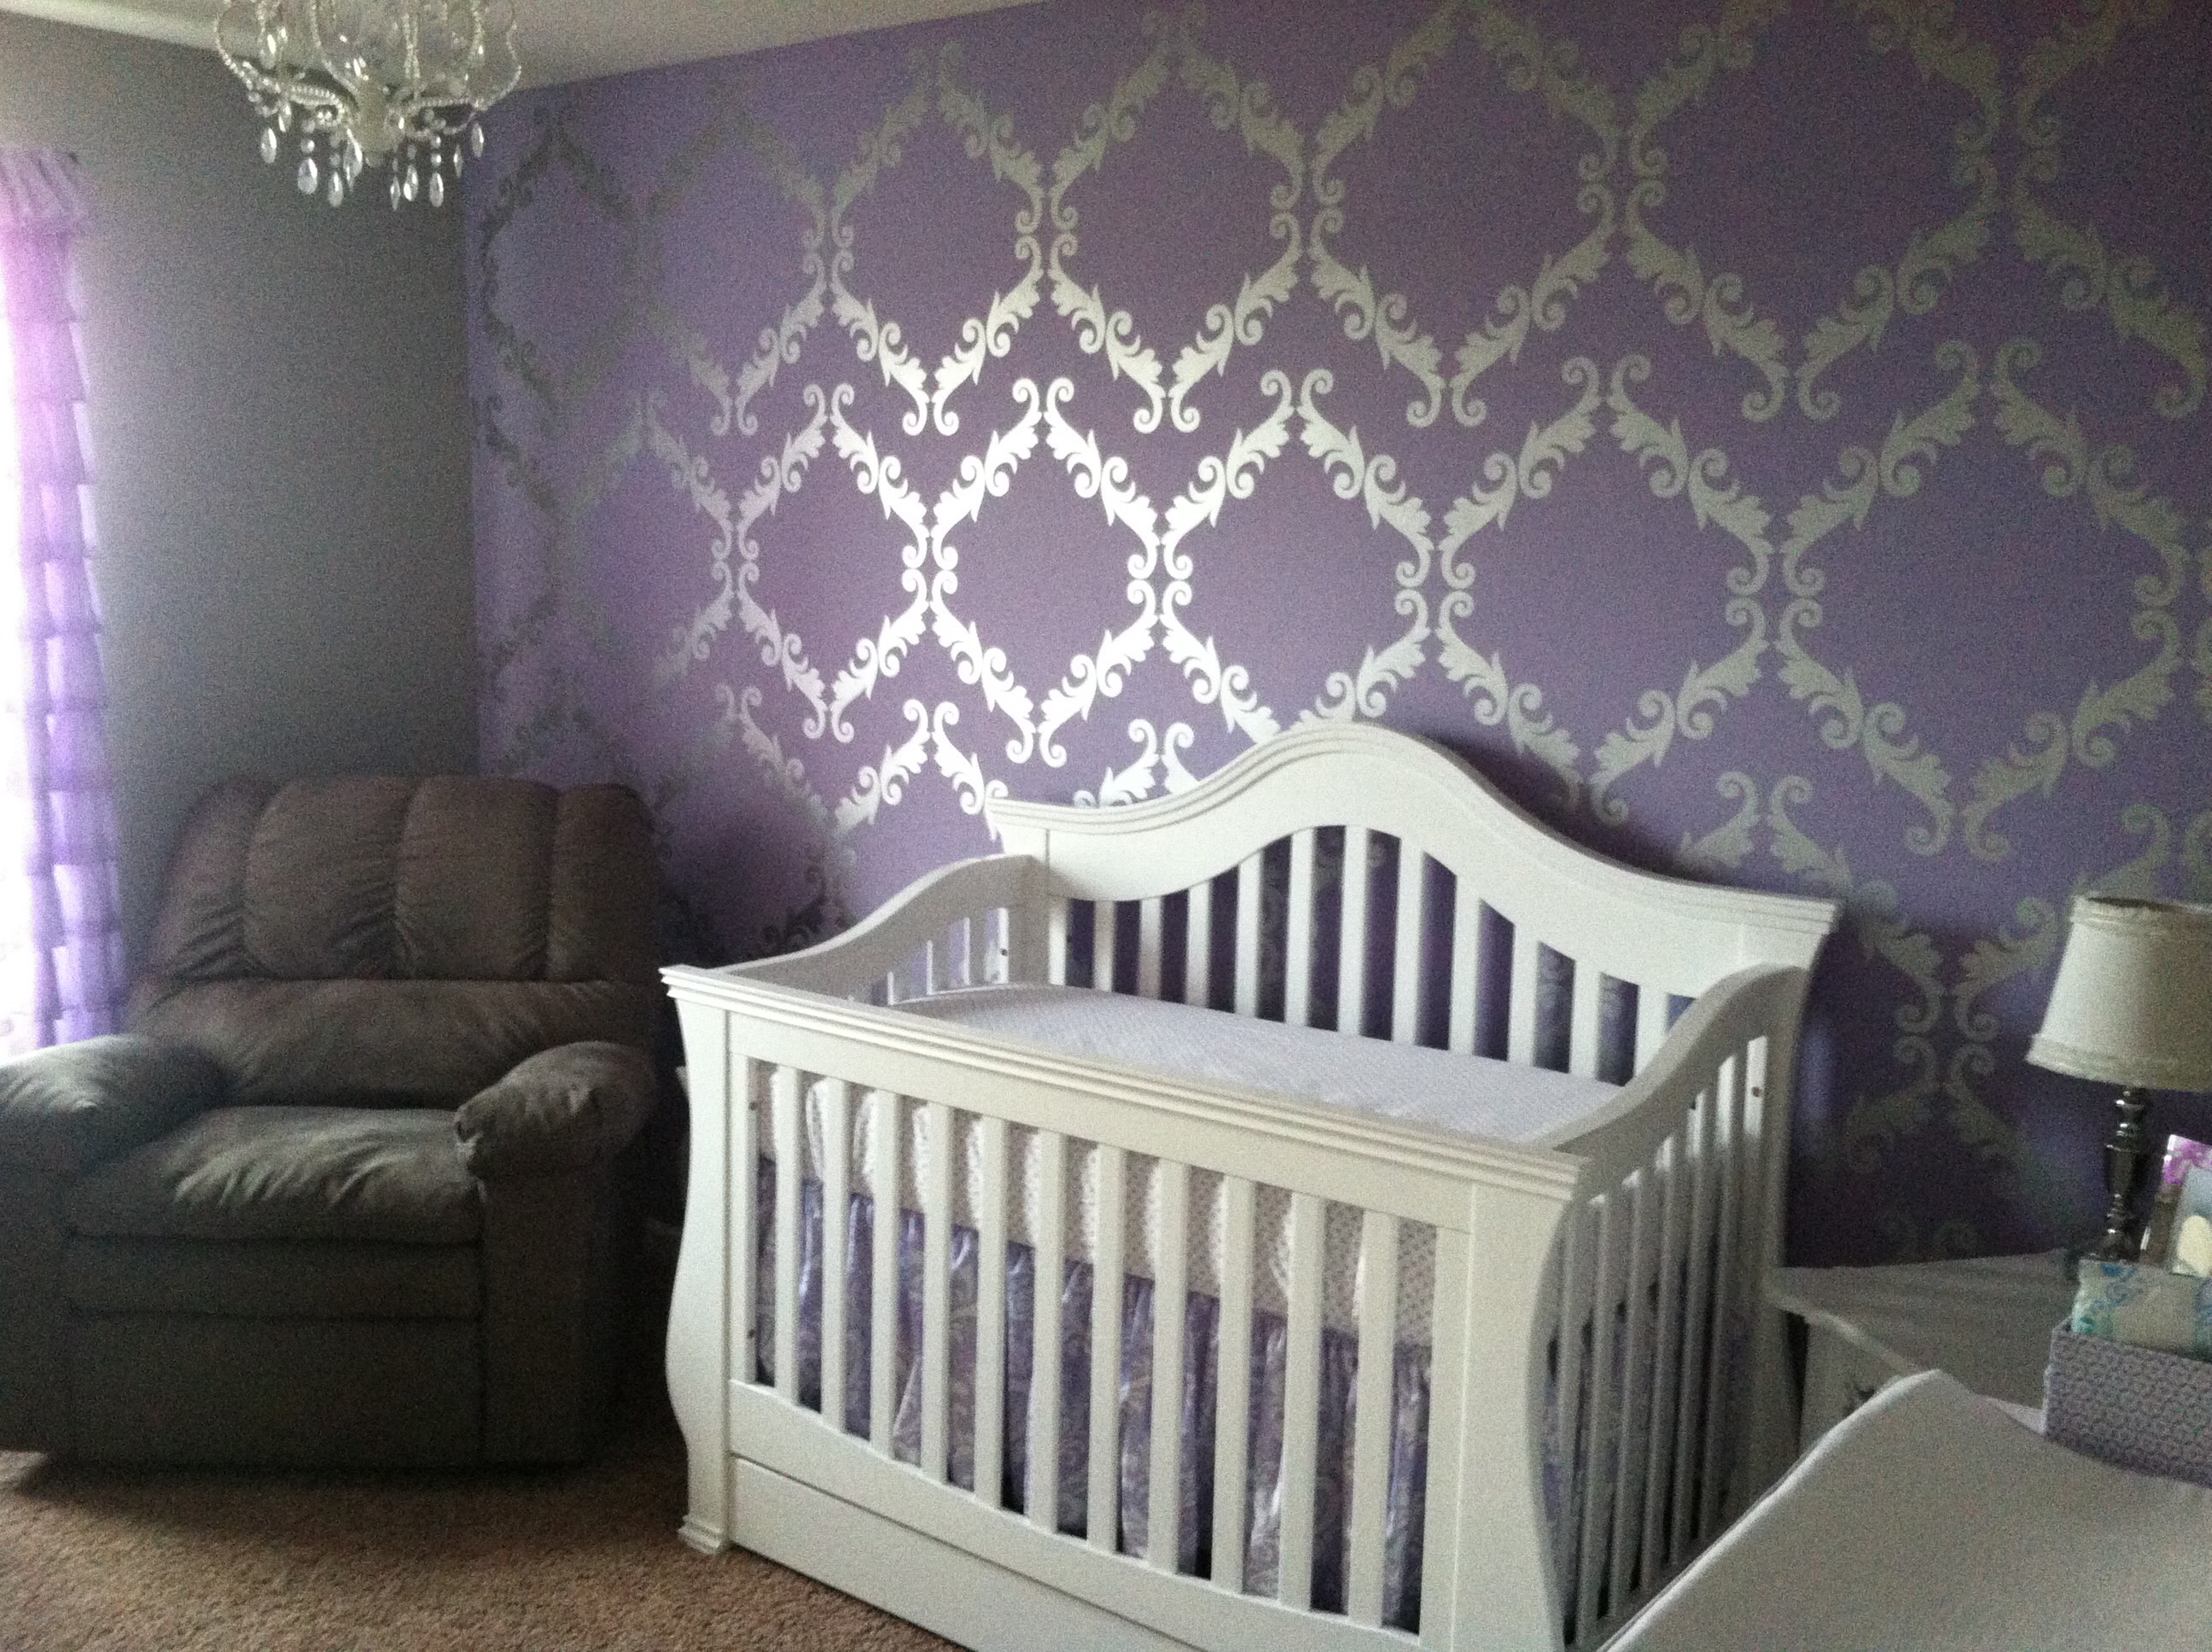 wallpaper purple and silver